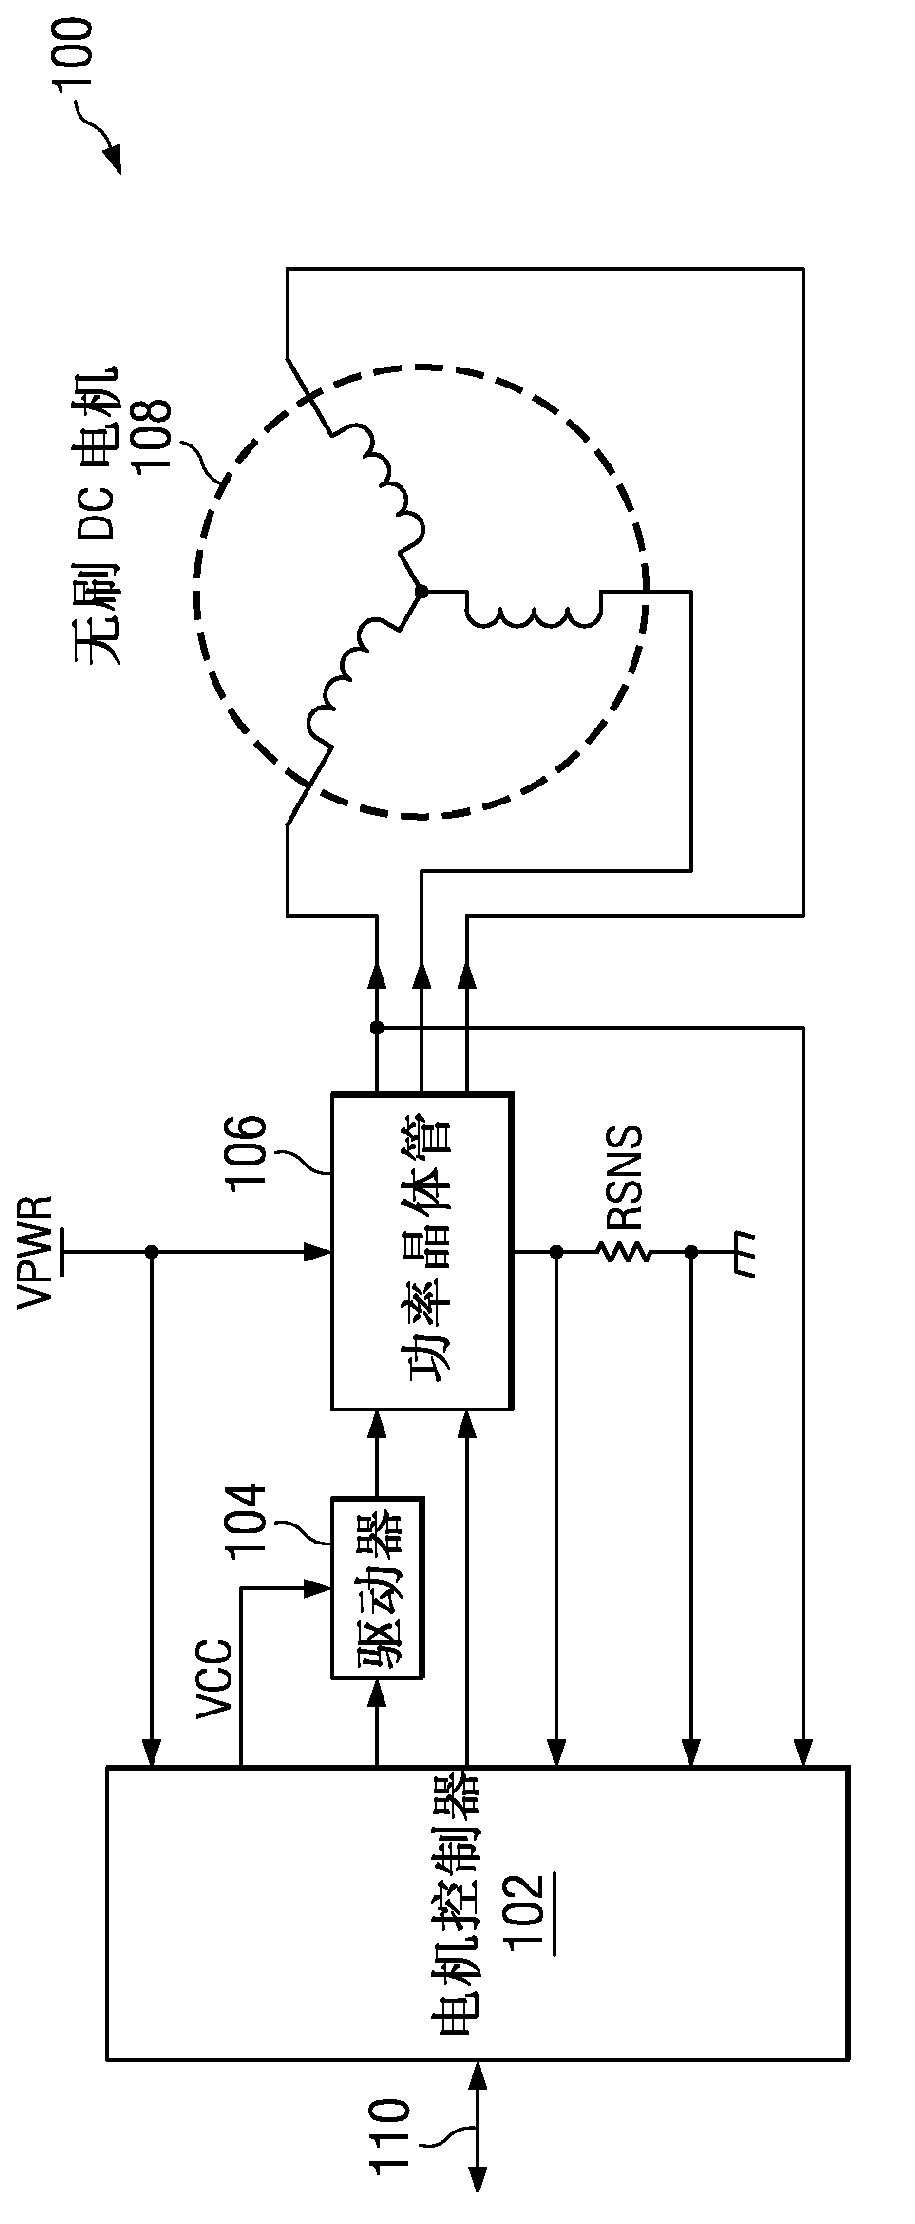 Initial position detection for a sensorless, brushless dc motor